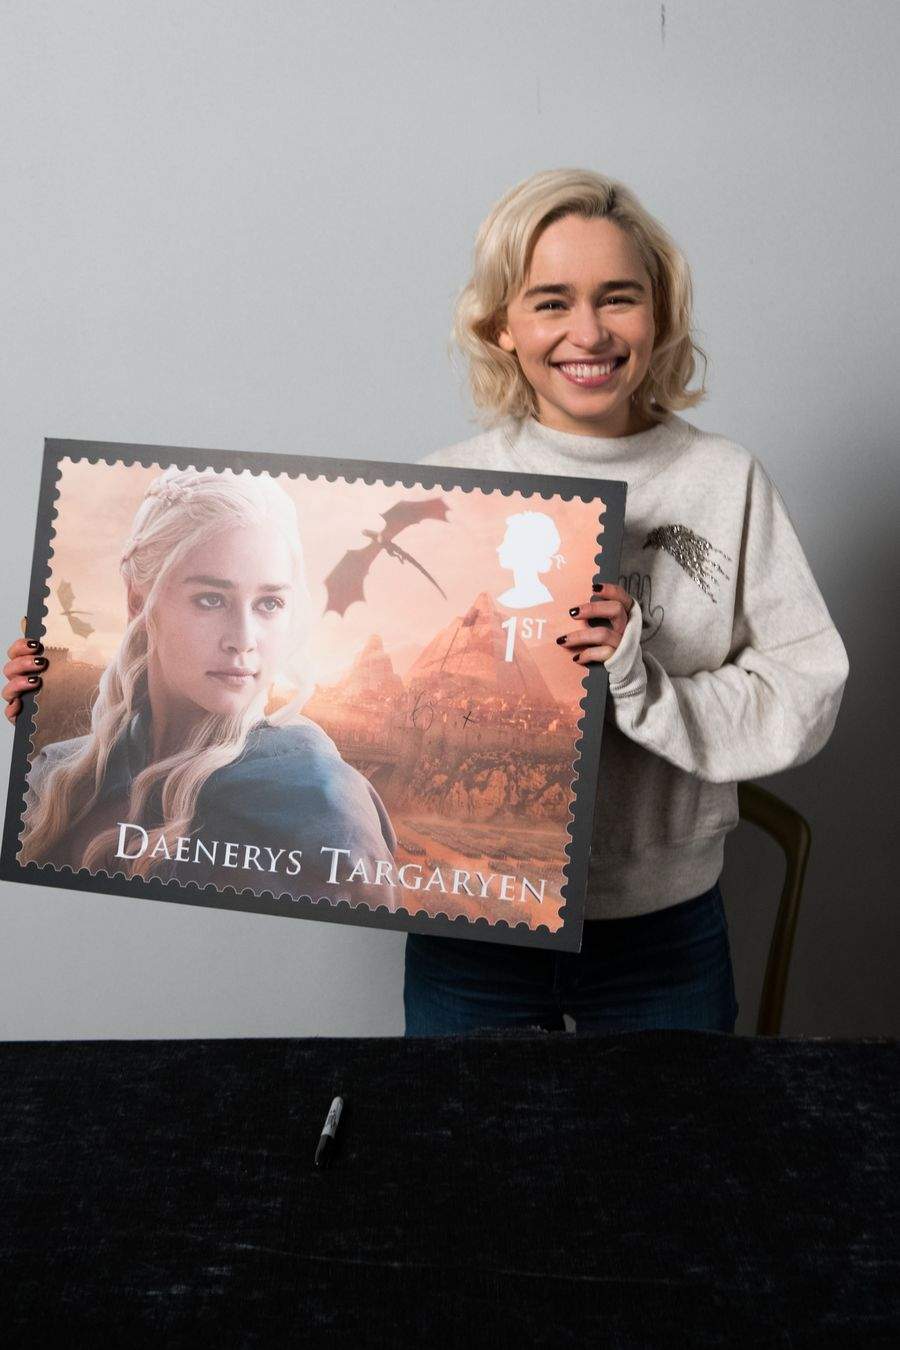 game of thrones stamps - St Daenerys Targaryen